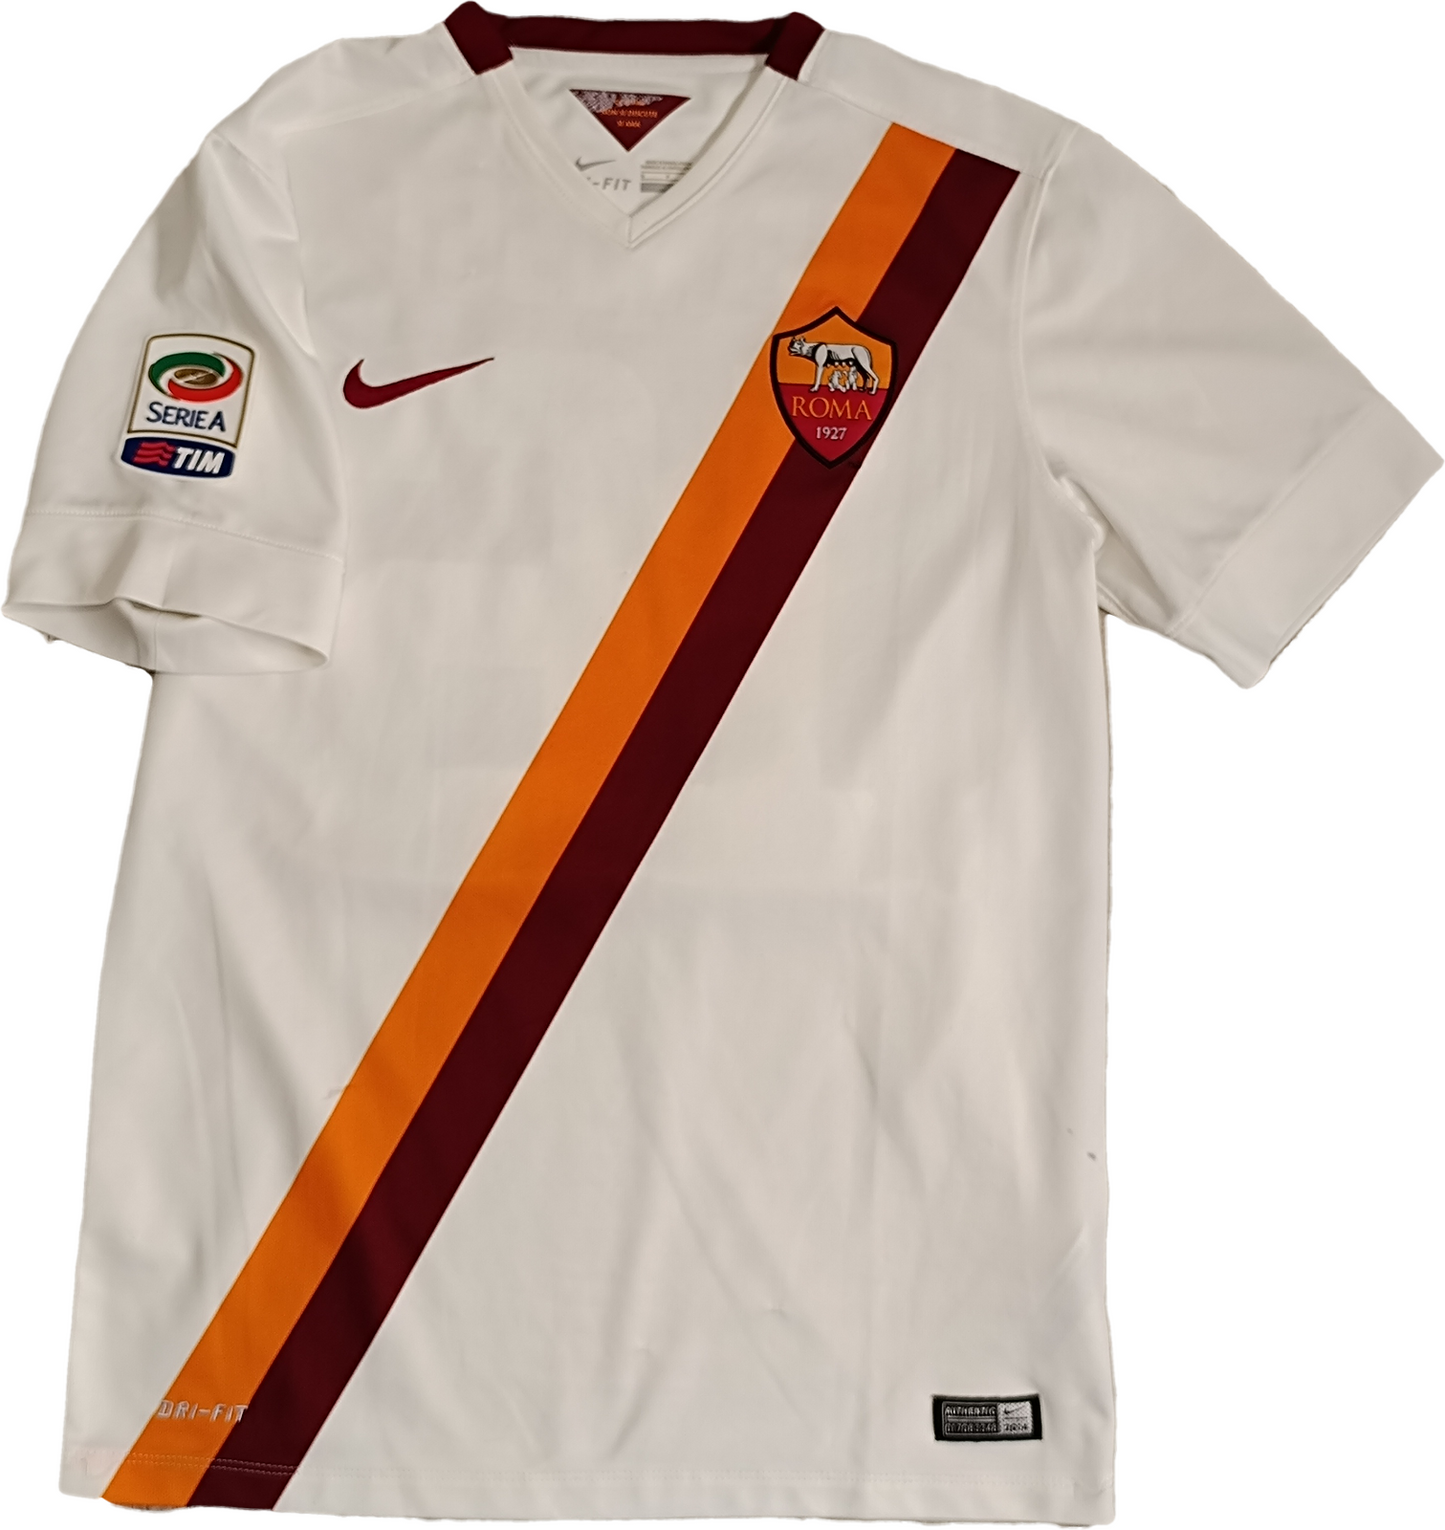 MAGLIA ROMA TOTTI calcio shirt 2014 2015 JERSEY NIKE stadium Version NO THAI